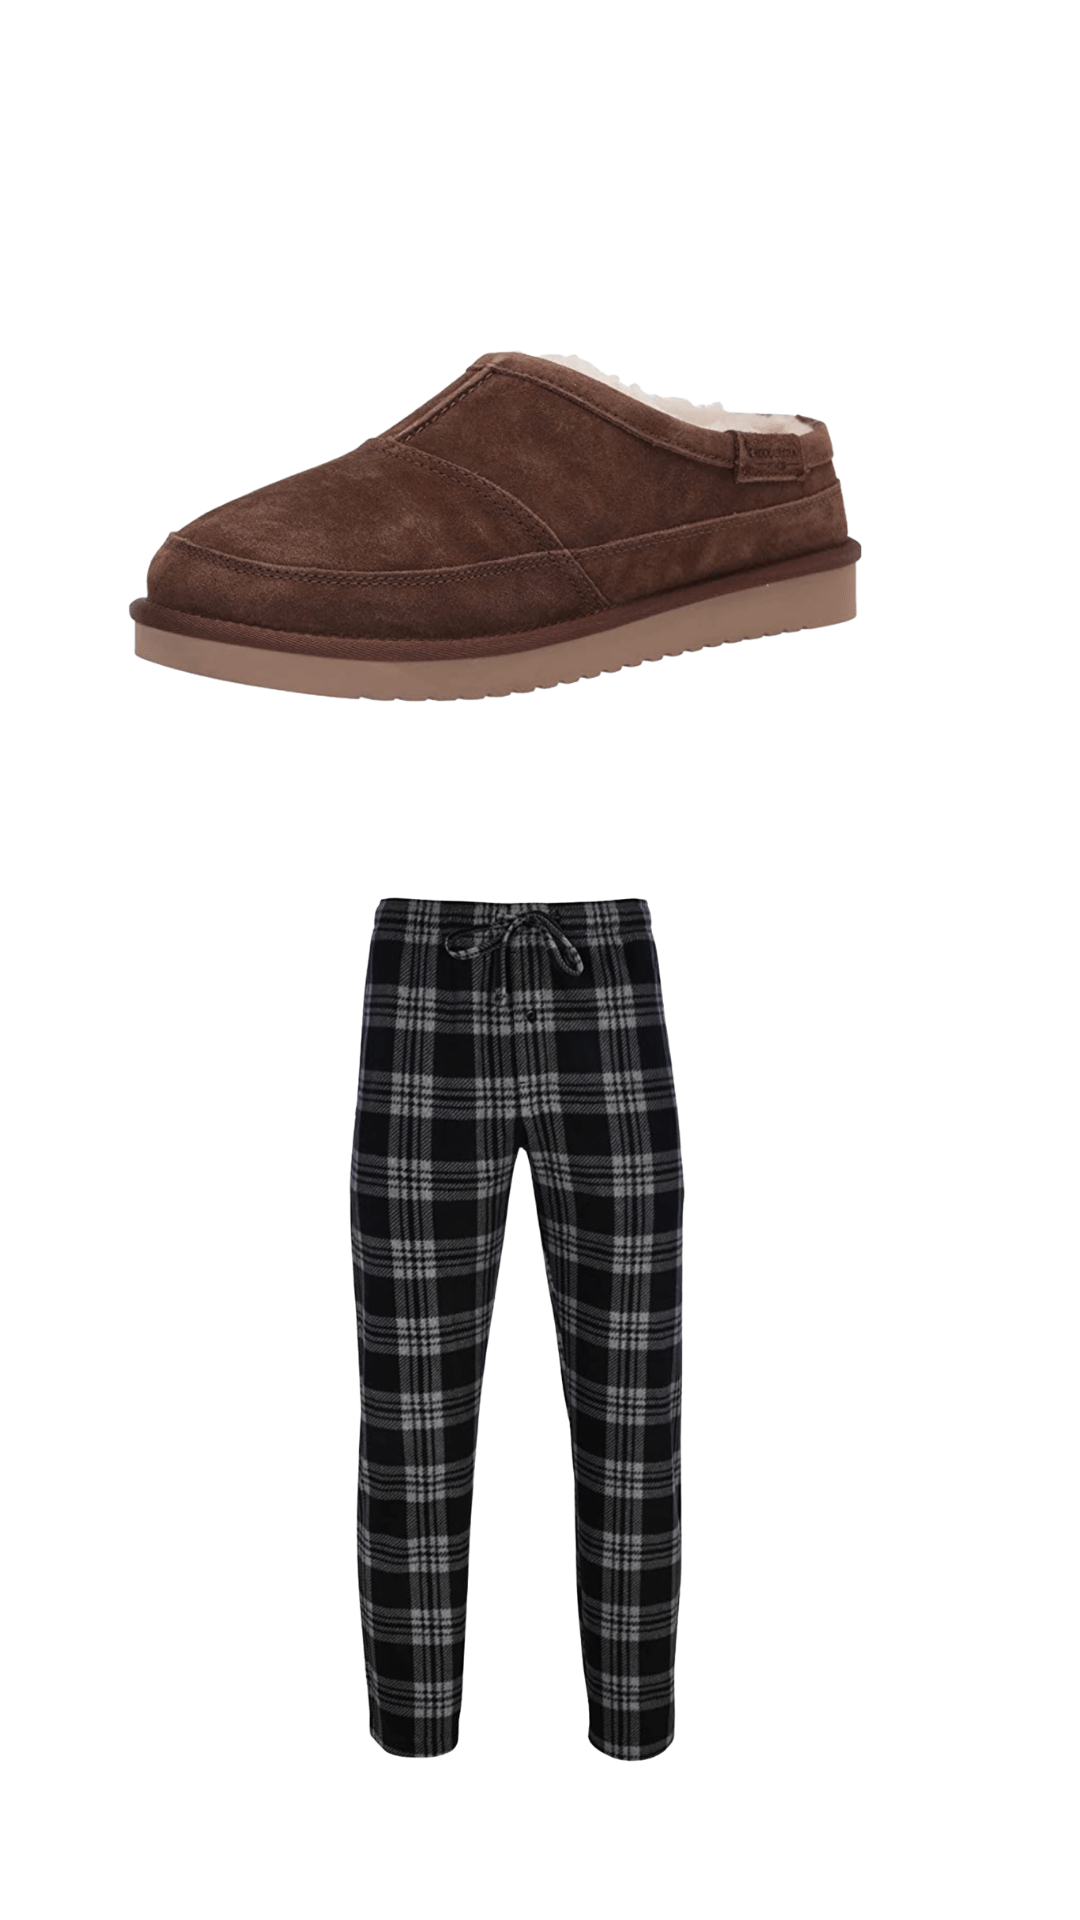 Men's brown, sheepskin slippers and Hanes pajama pants in blue/black plaid